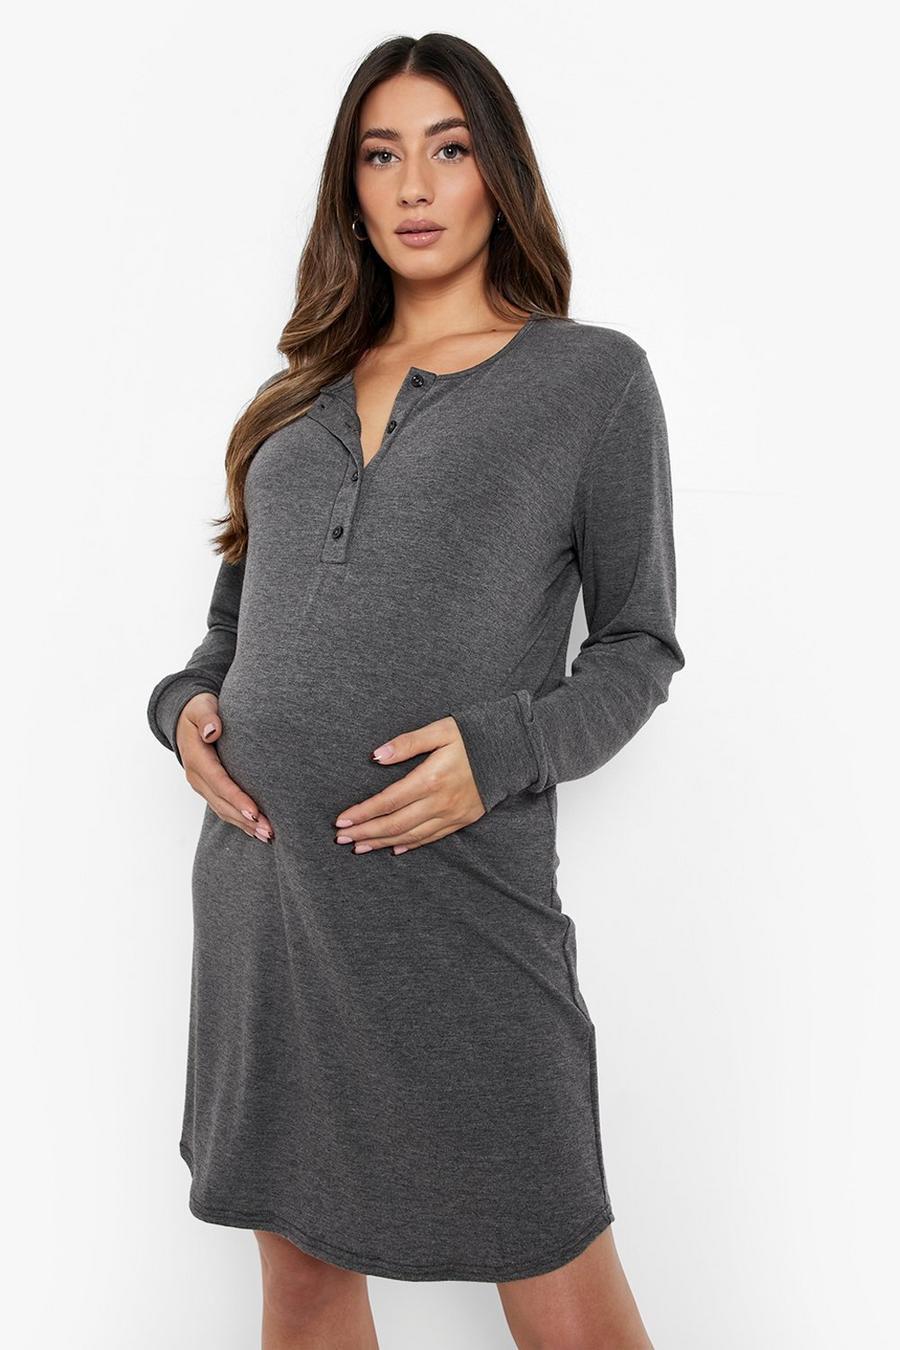 Grey marl Maternity Long Sleeve Half Button Nightie